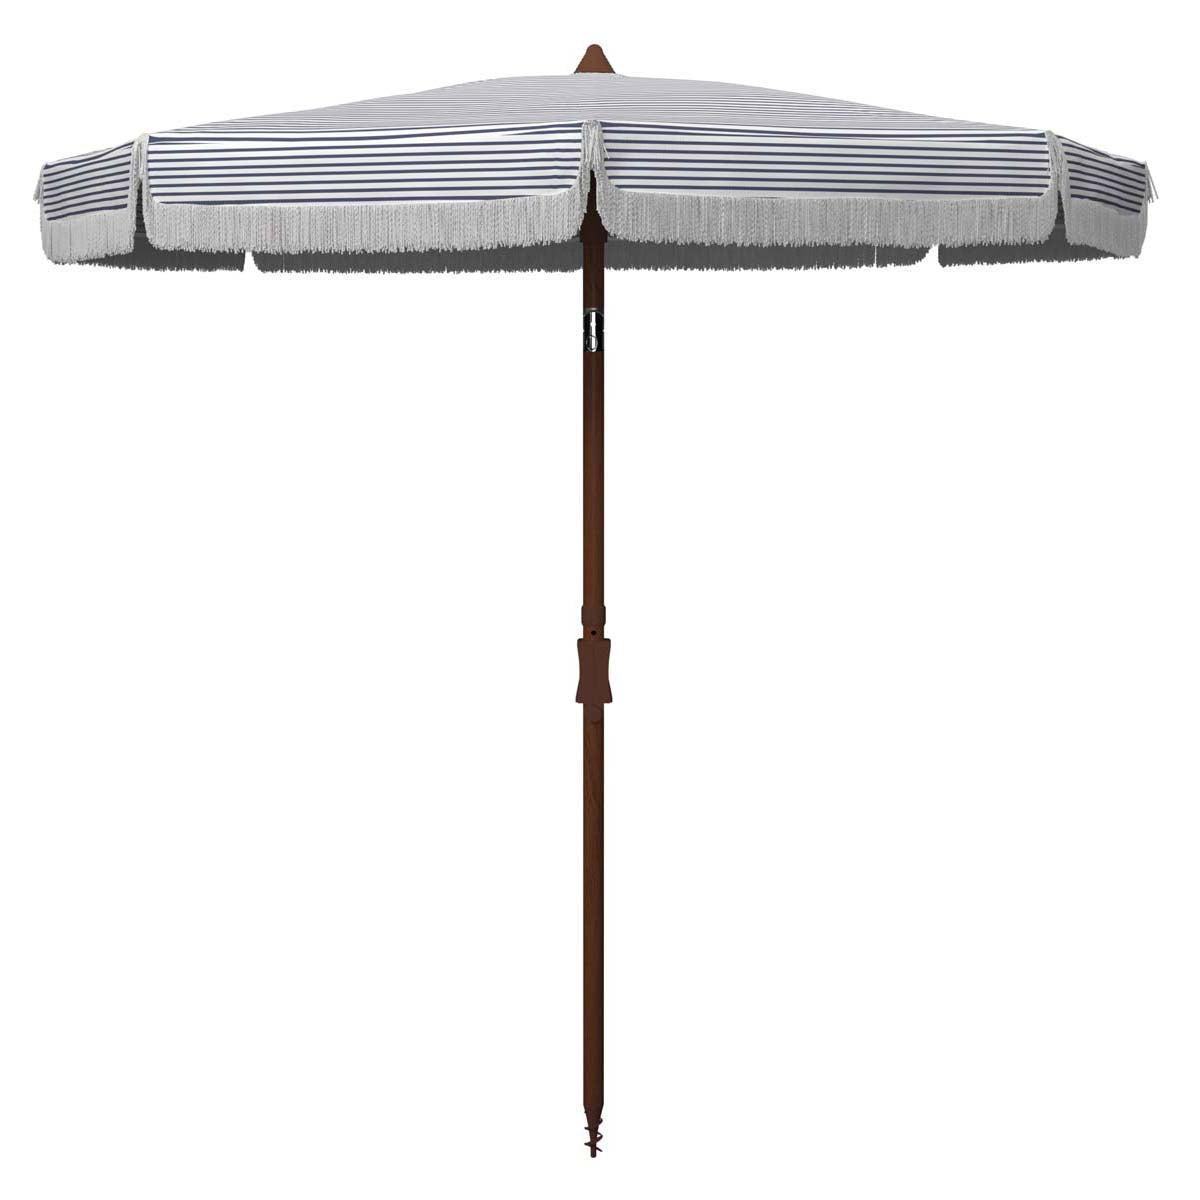 Safavieh Copen 6.5 Ft Umbrella , PAT8501 - White/Navy Stripe